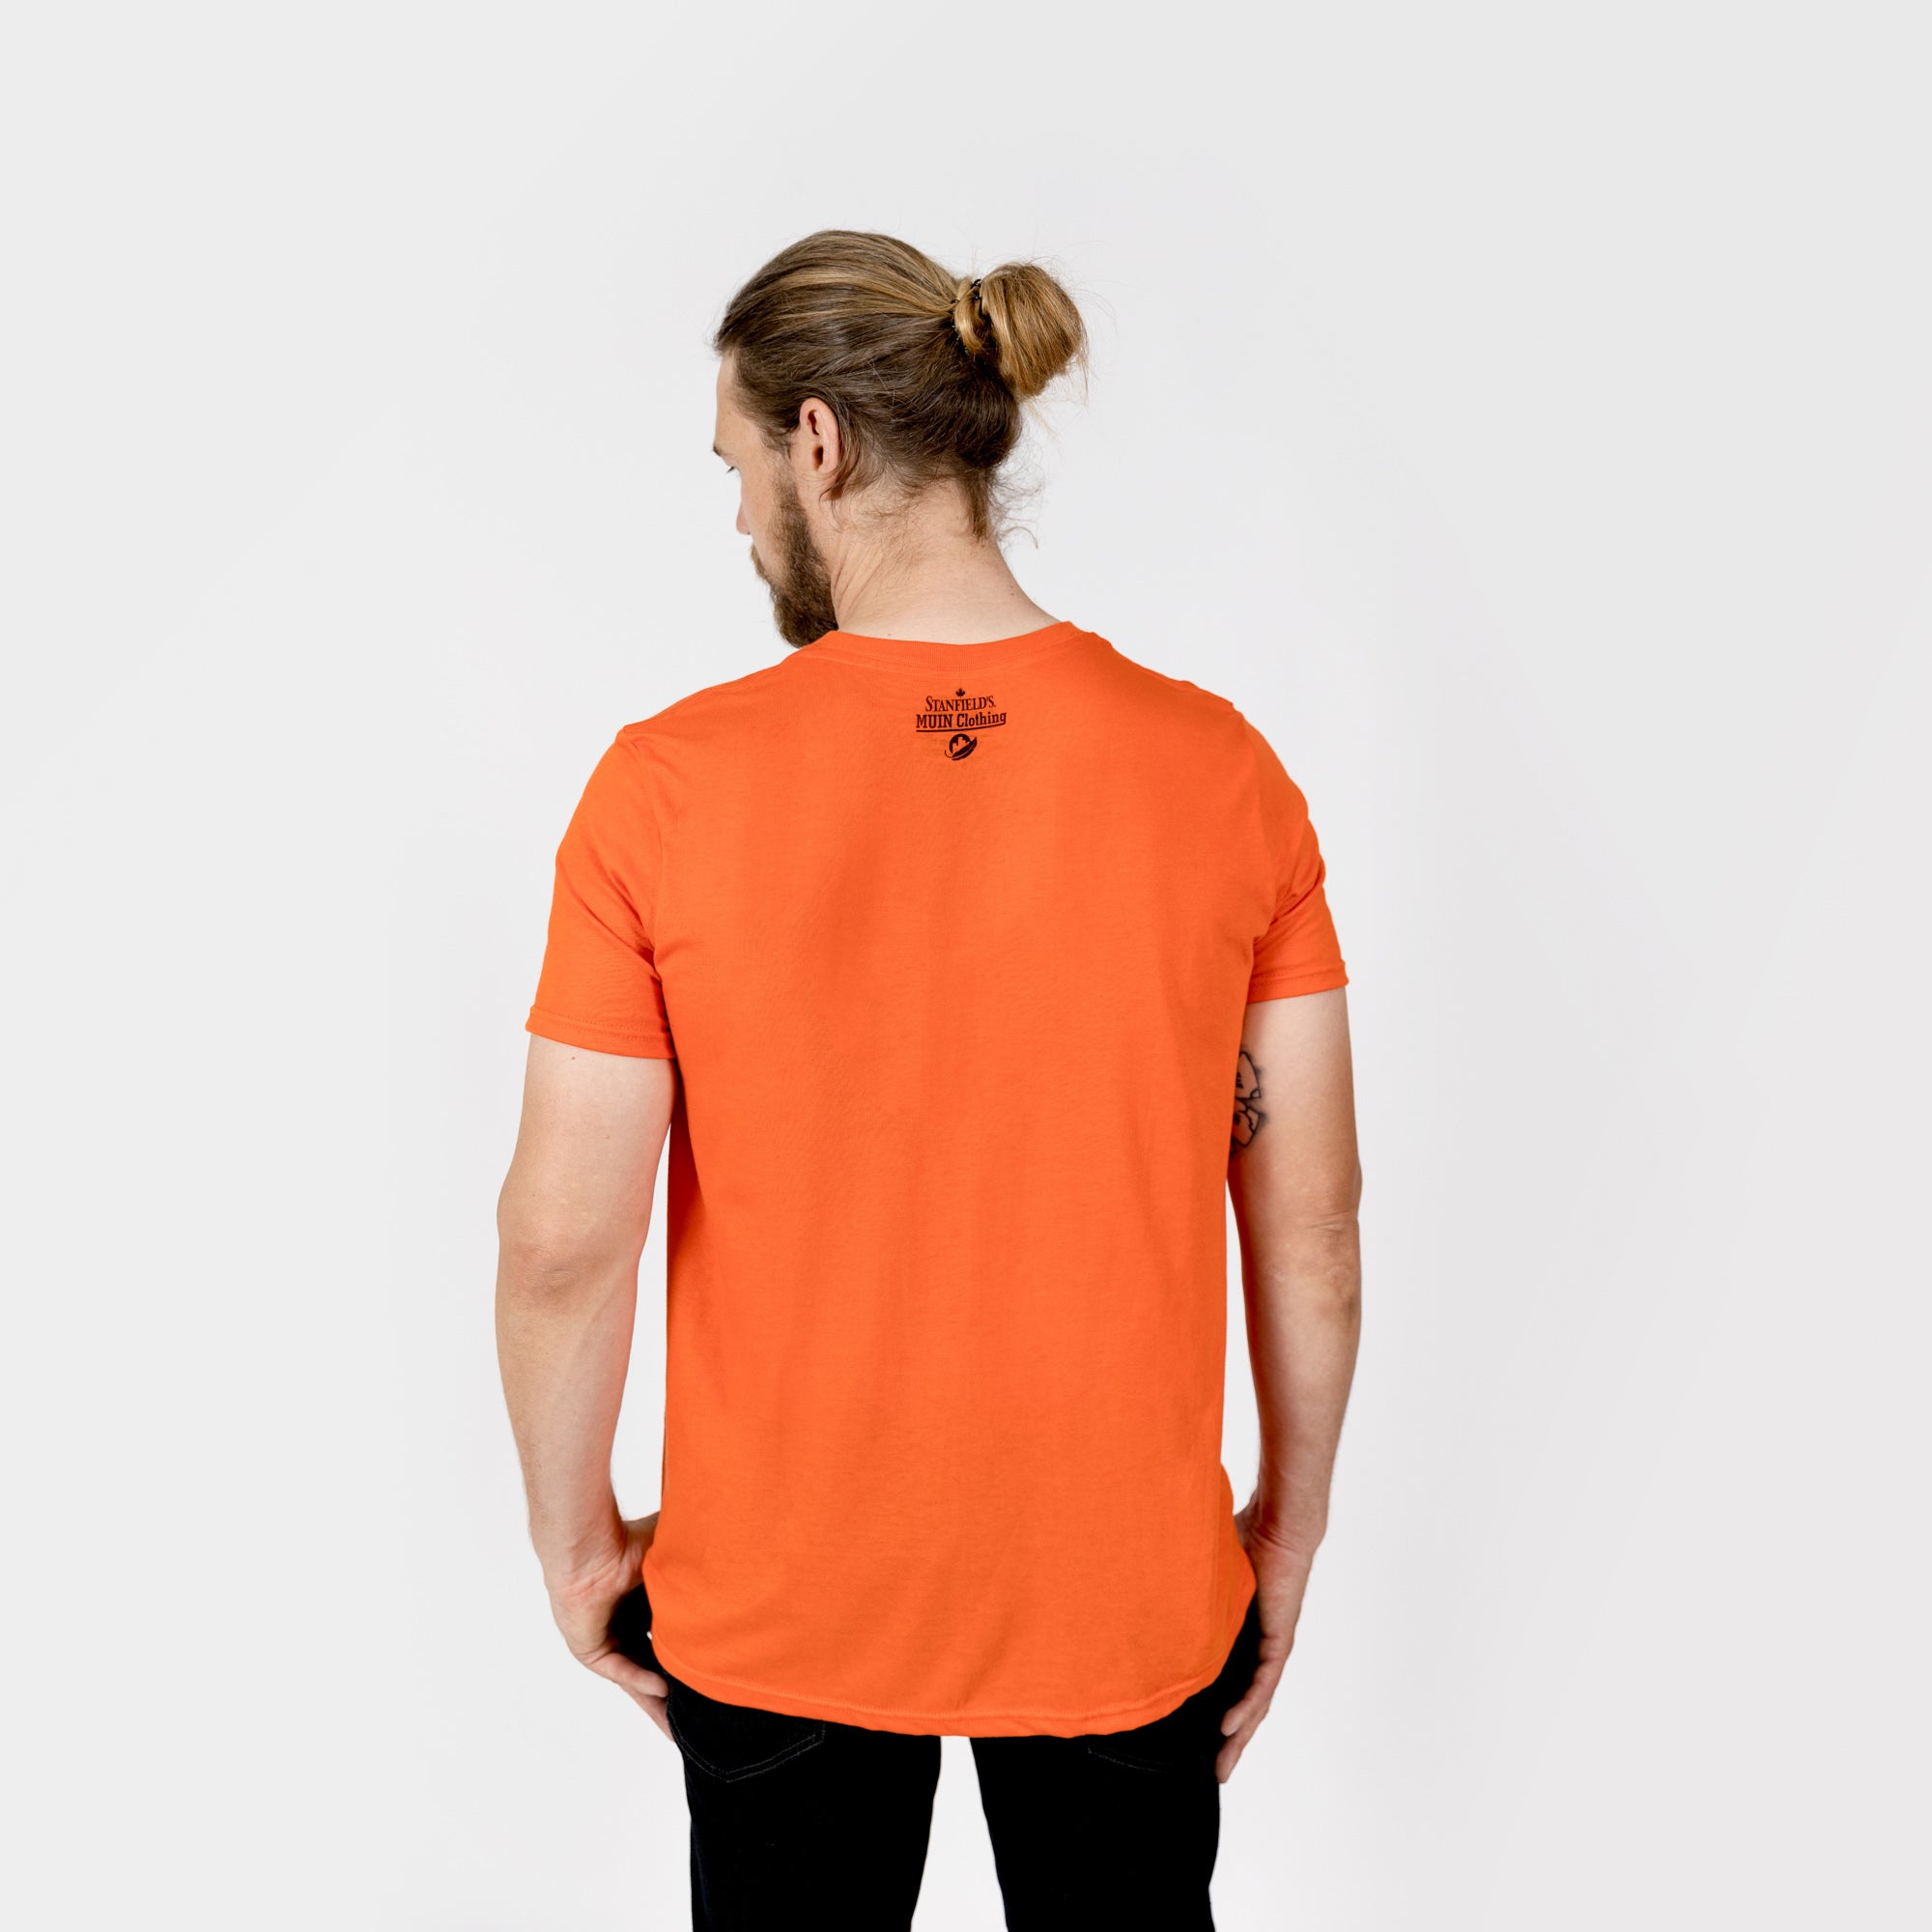 Camiseta naranja de adulto de Muin X Stanfield - CADA NIÑO IMPORTA "PLUMAS"